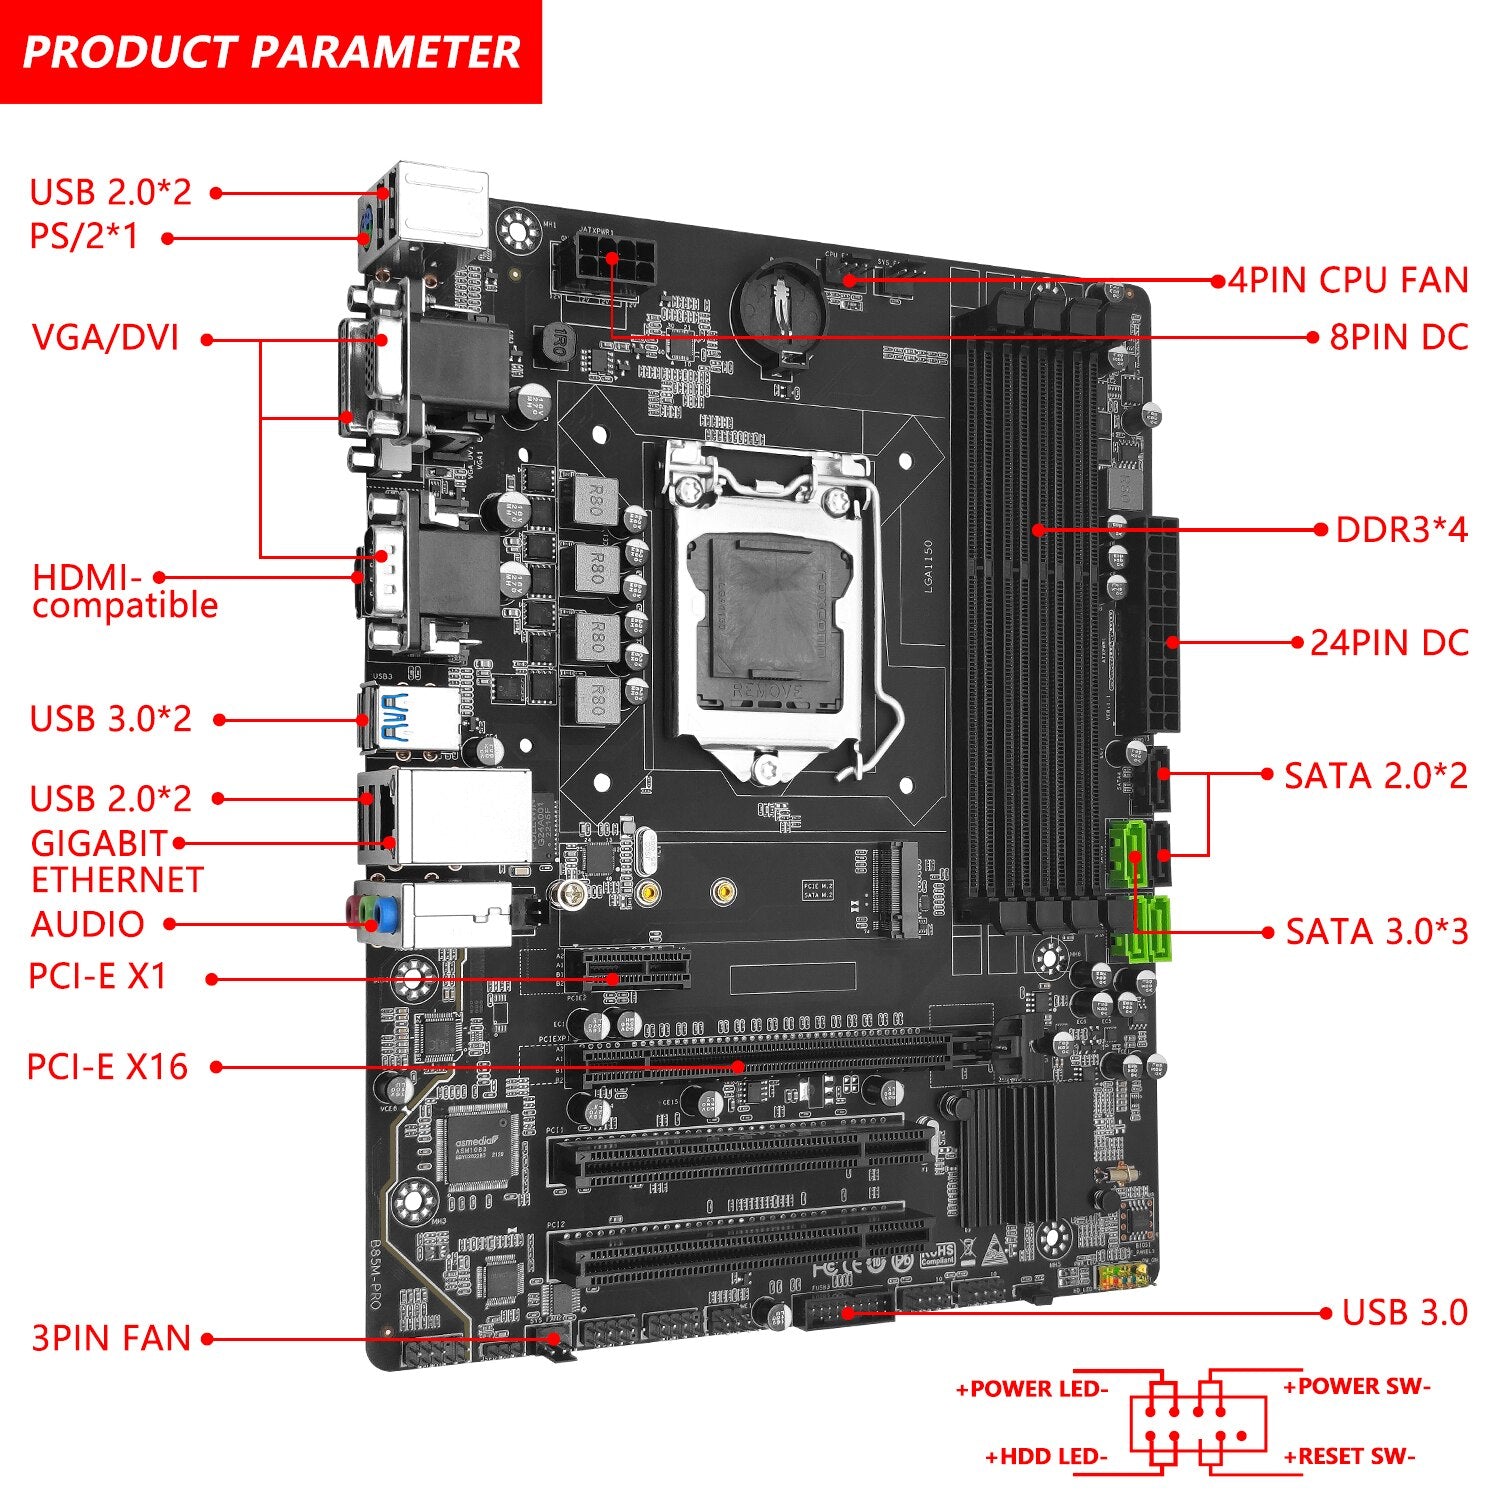 32GB LGA 1150 USB 3.0 Intel Xeon E3 Series DDR3 Motherboard